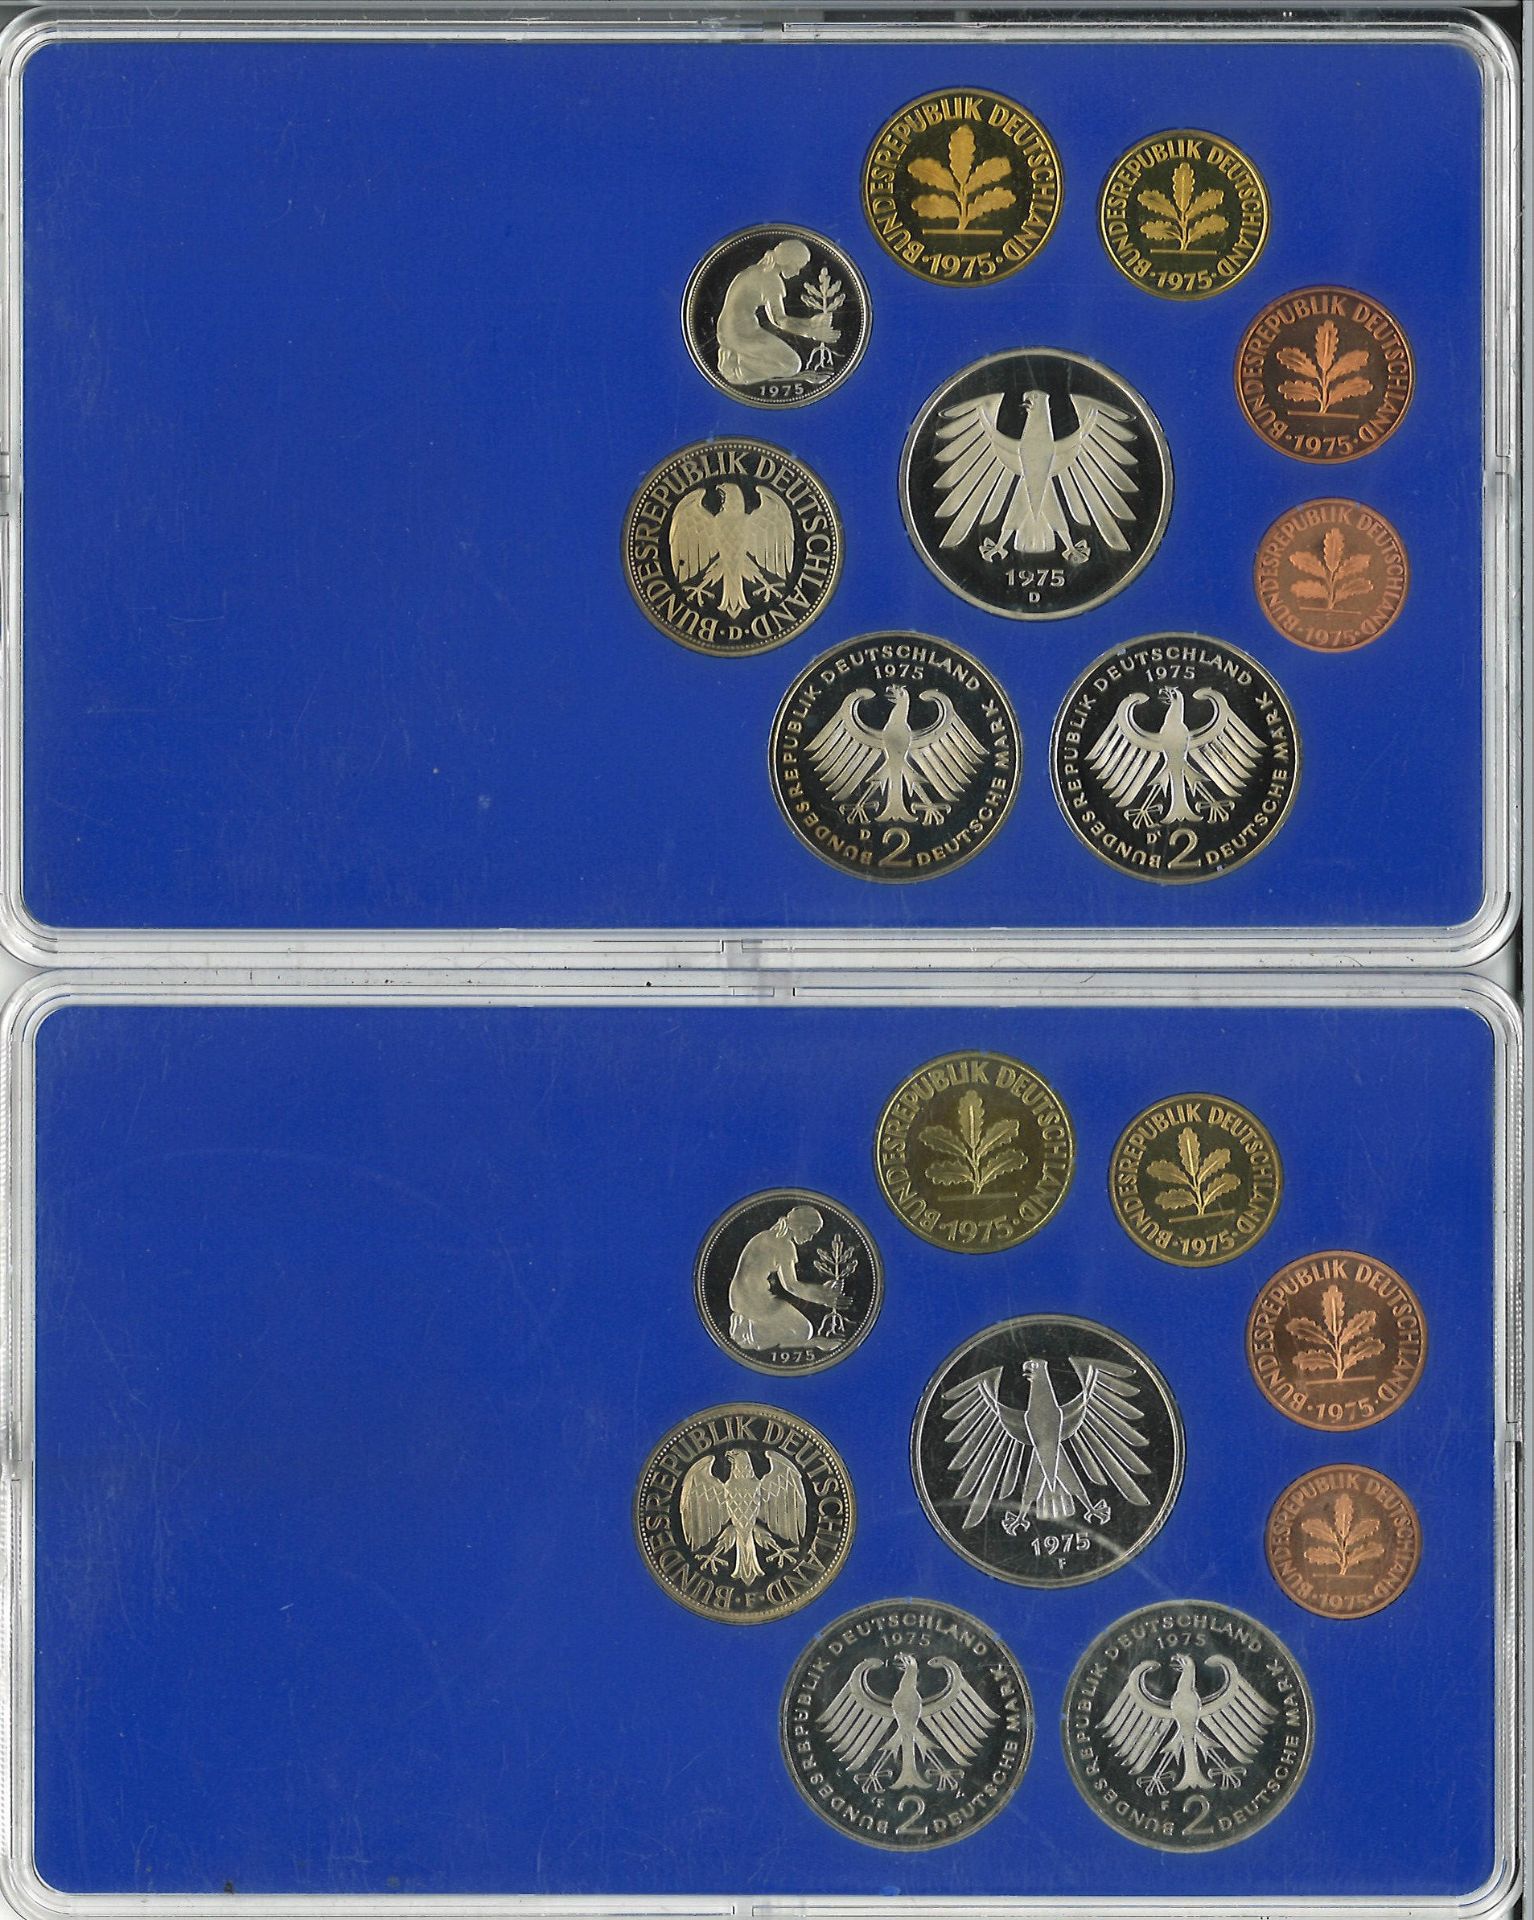 BRD Münzsets Jahrgang 1975, D, F, G und J. Im Original Blister. - Image 2 of 4